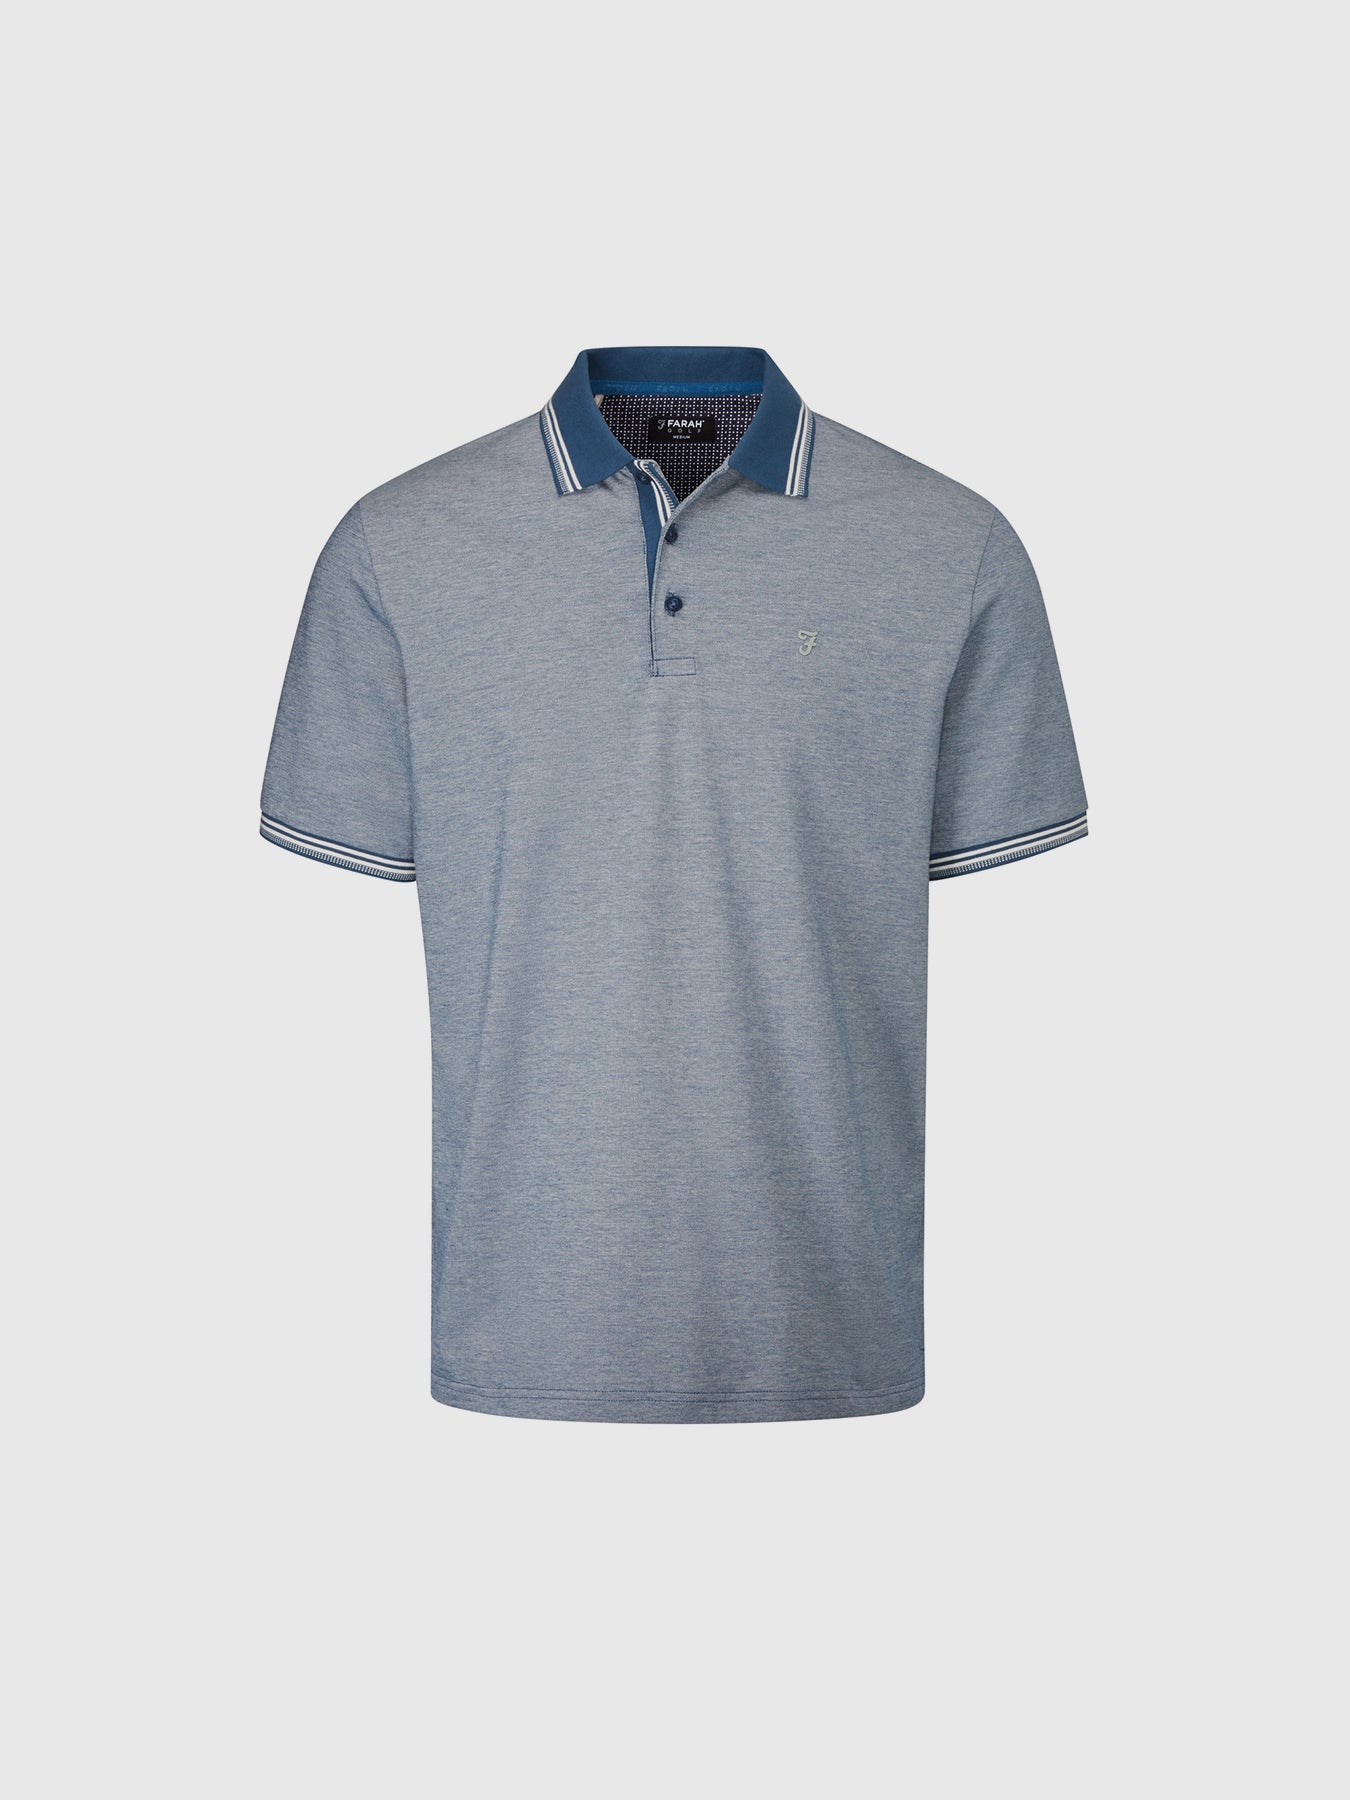 View Morrill Golf Polo Shirt In Regatta Blue information